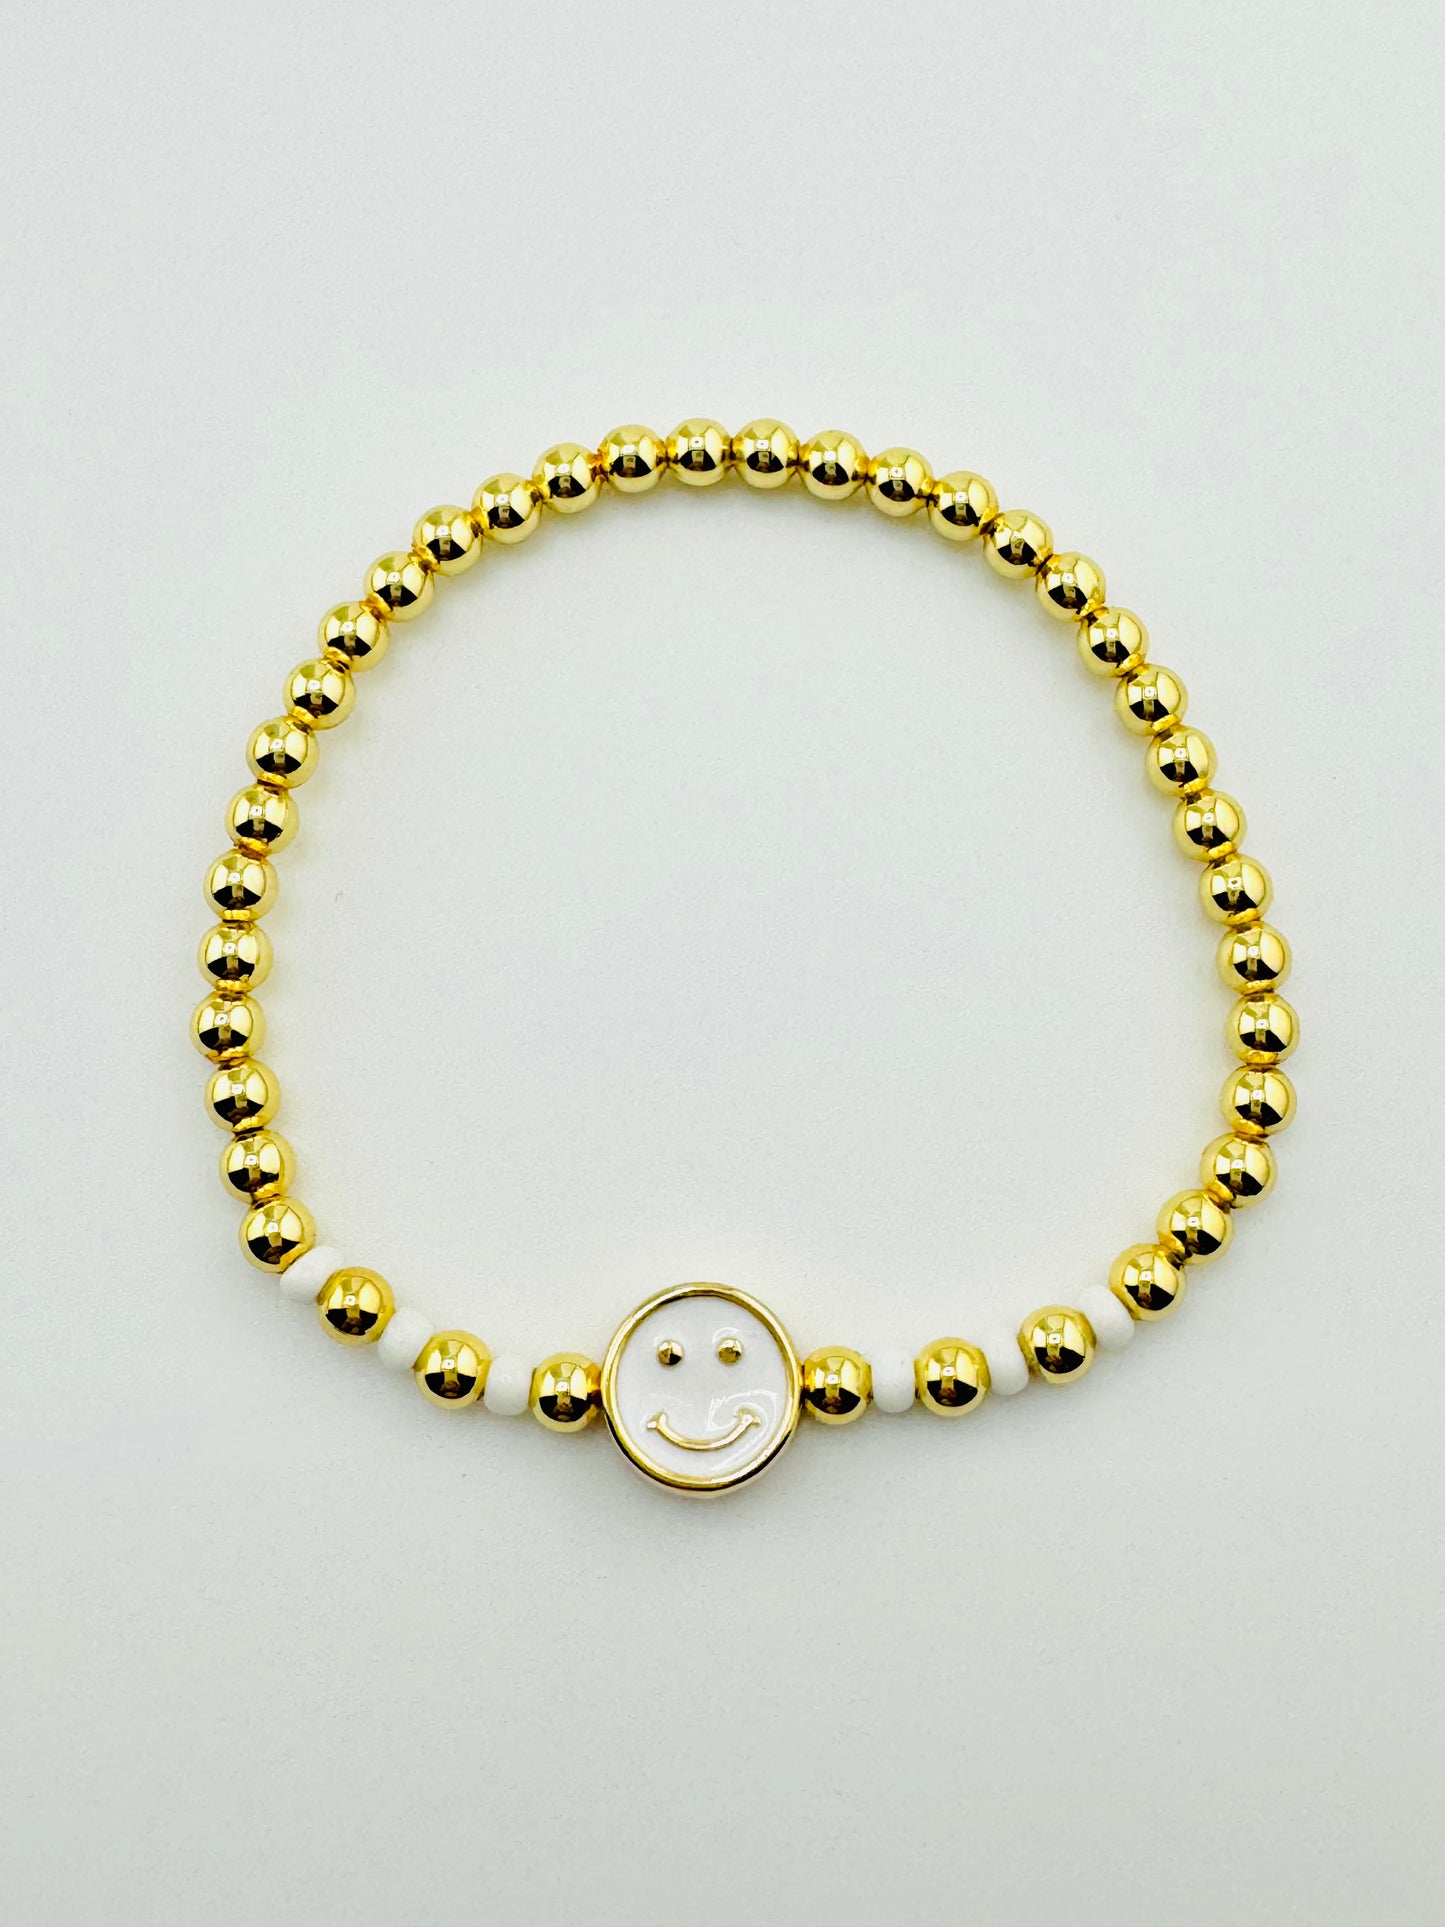 Caroline white happy face and gold filled bracelet